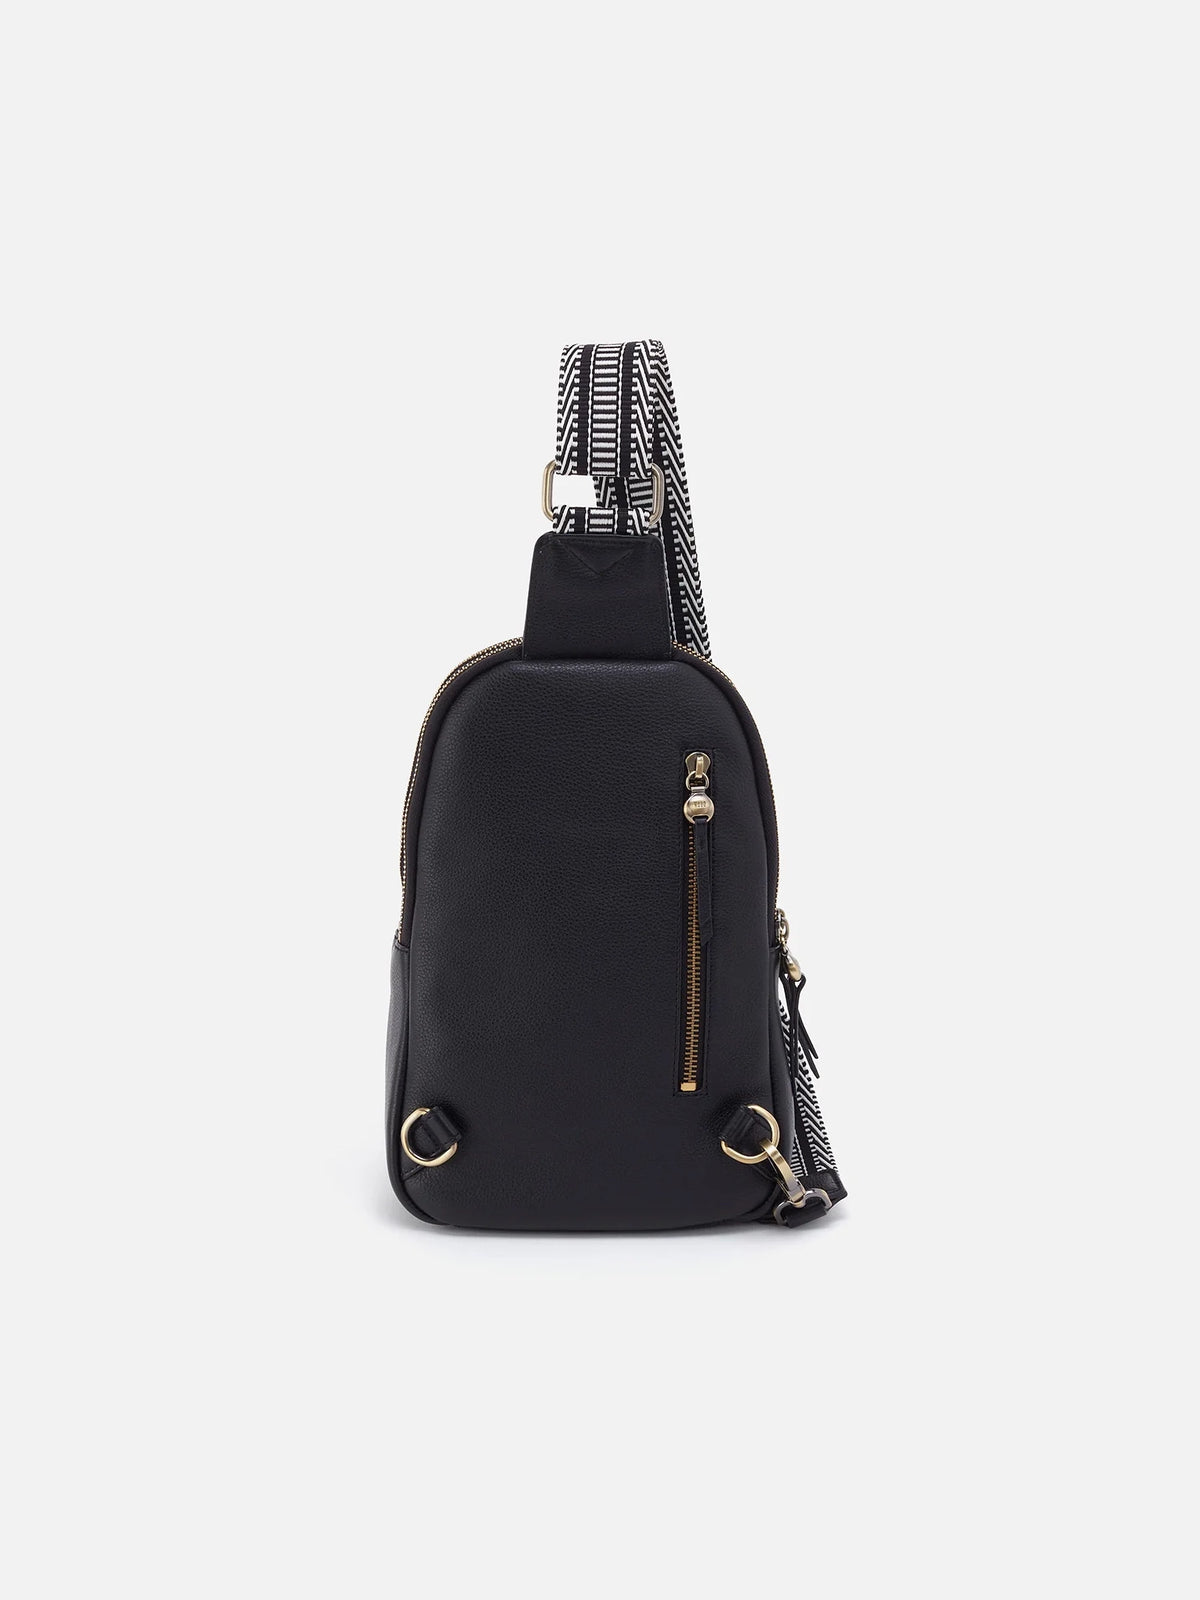 hobo cass sling bag in black pebbled leather